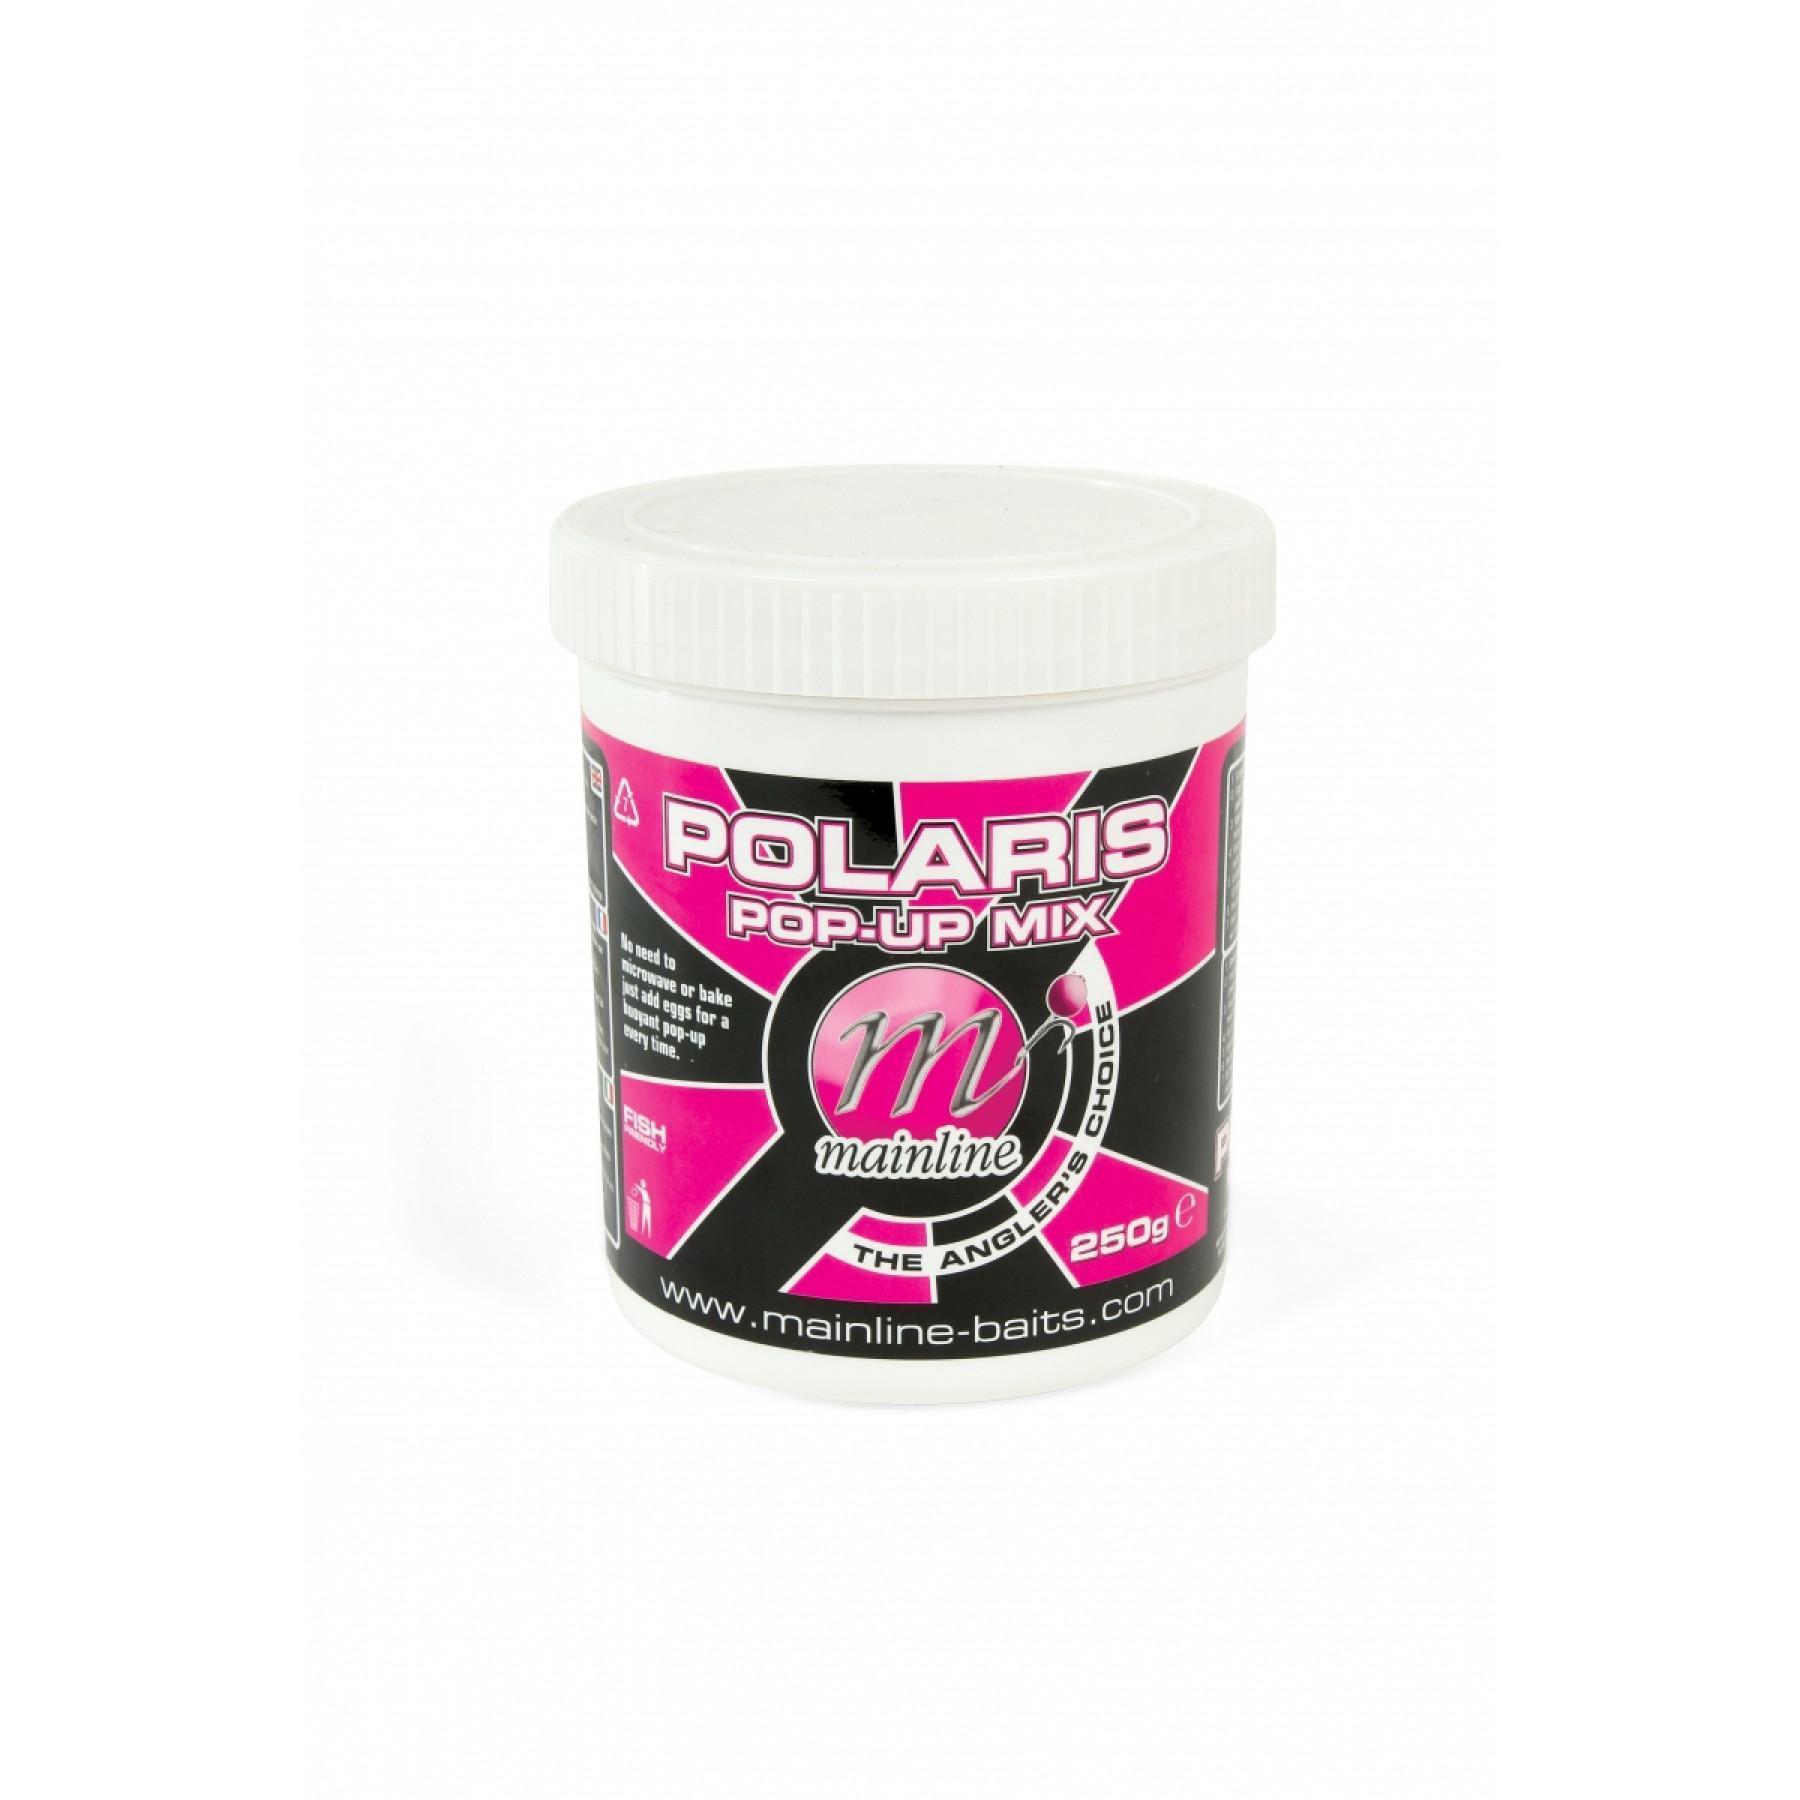 Polaris Mainline Pop-Up mix 250g